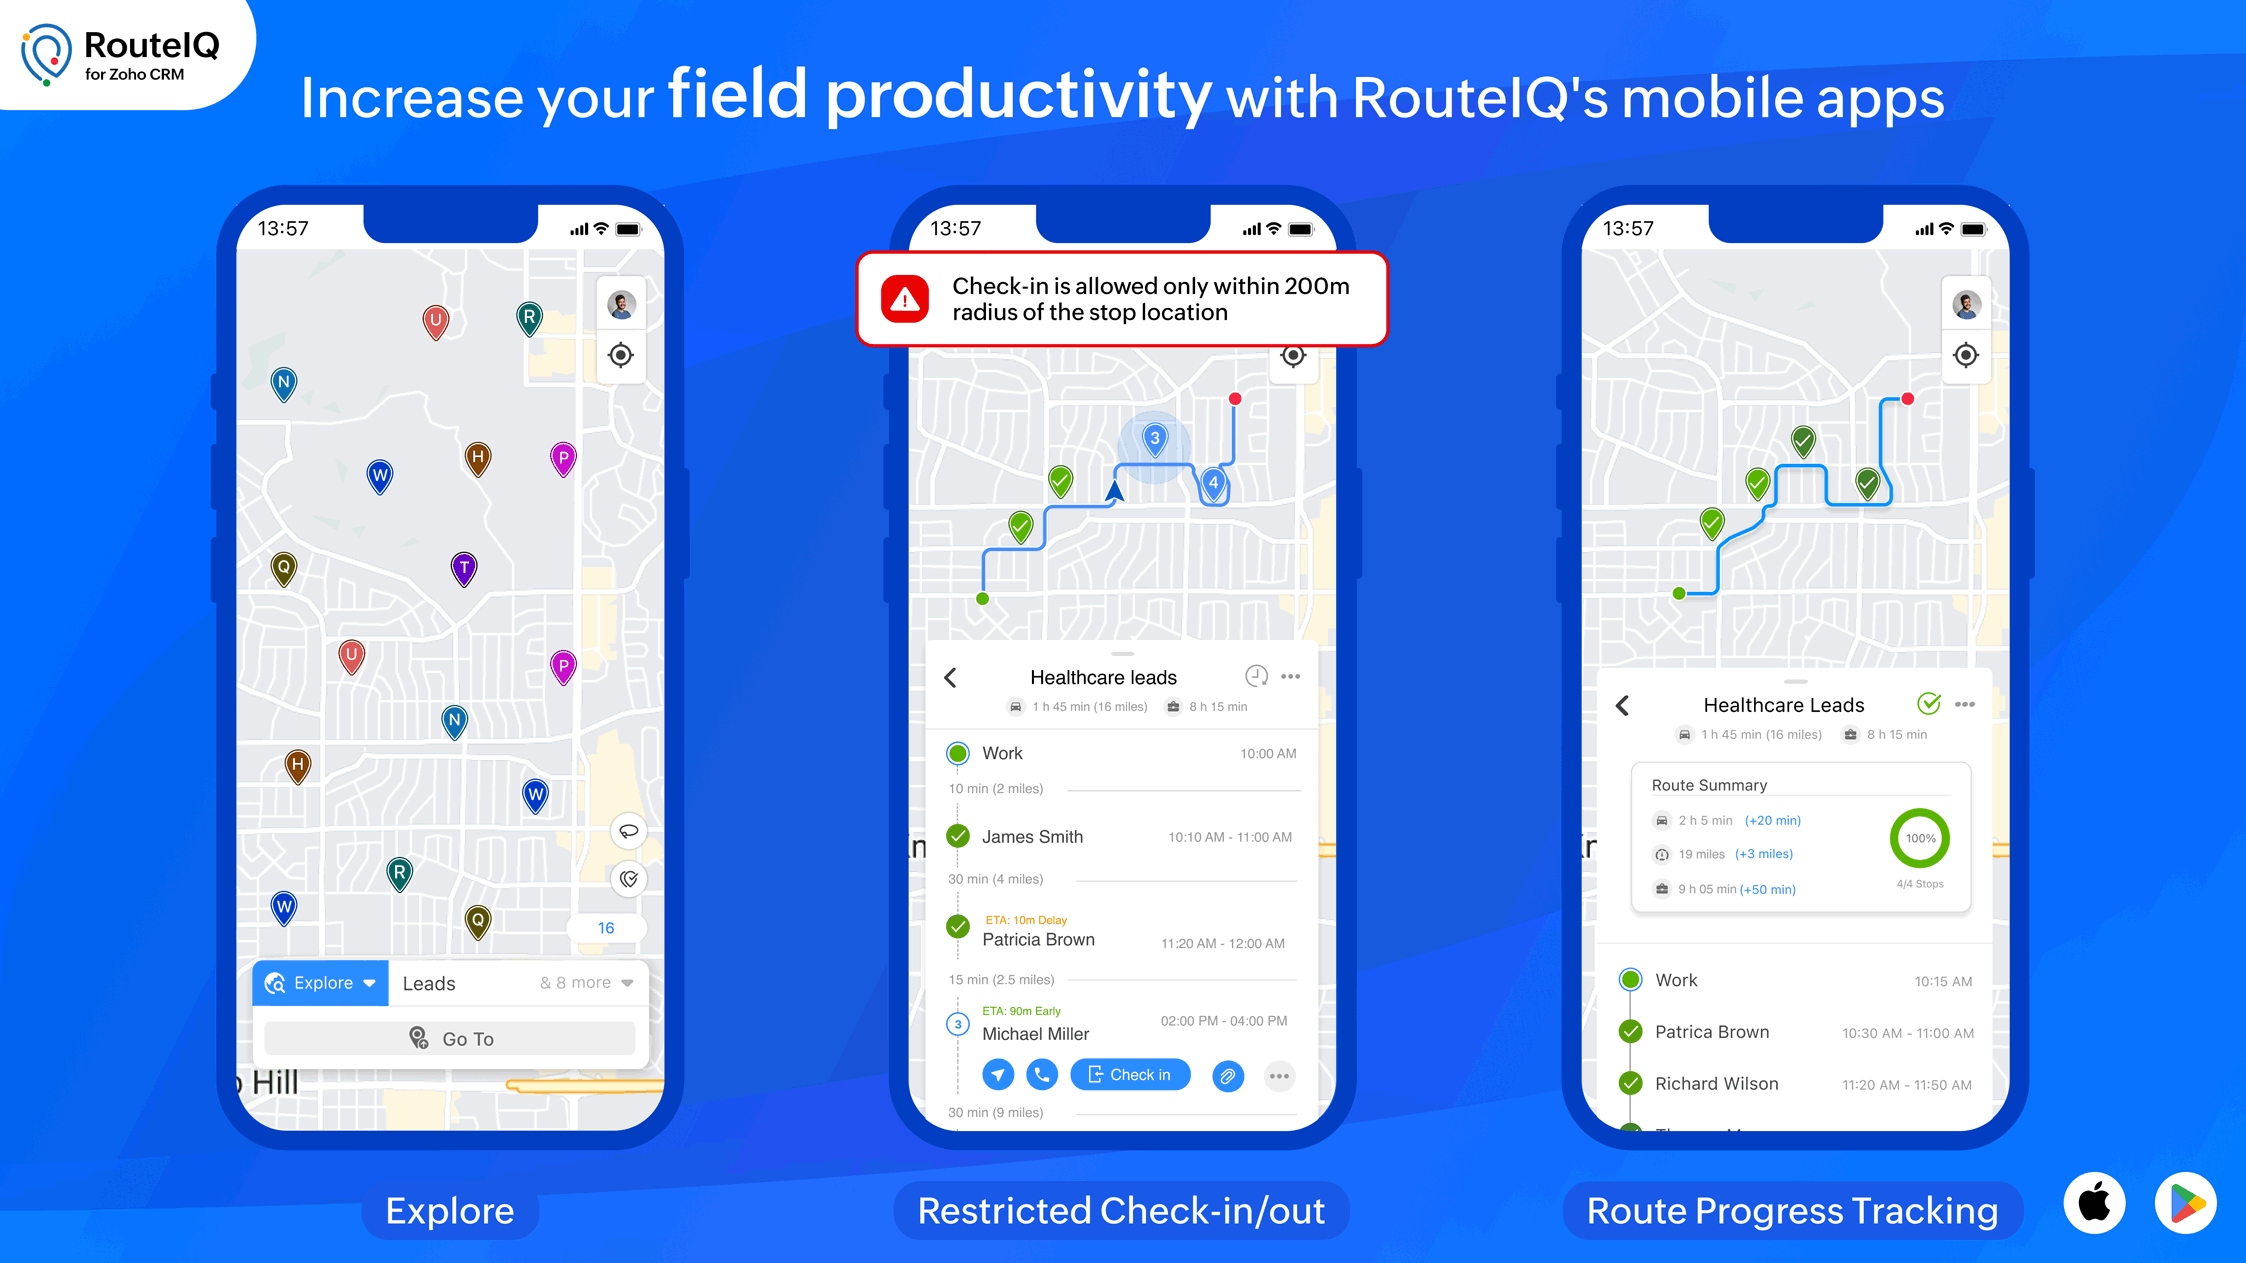 RouteIQ mobile features